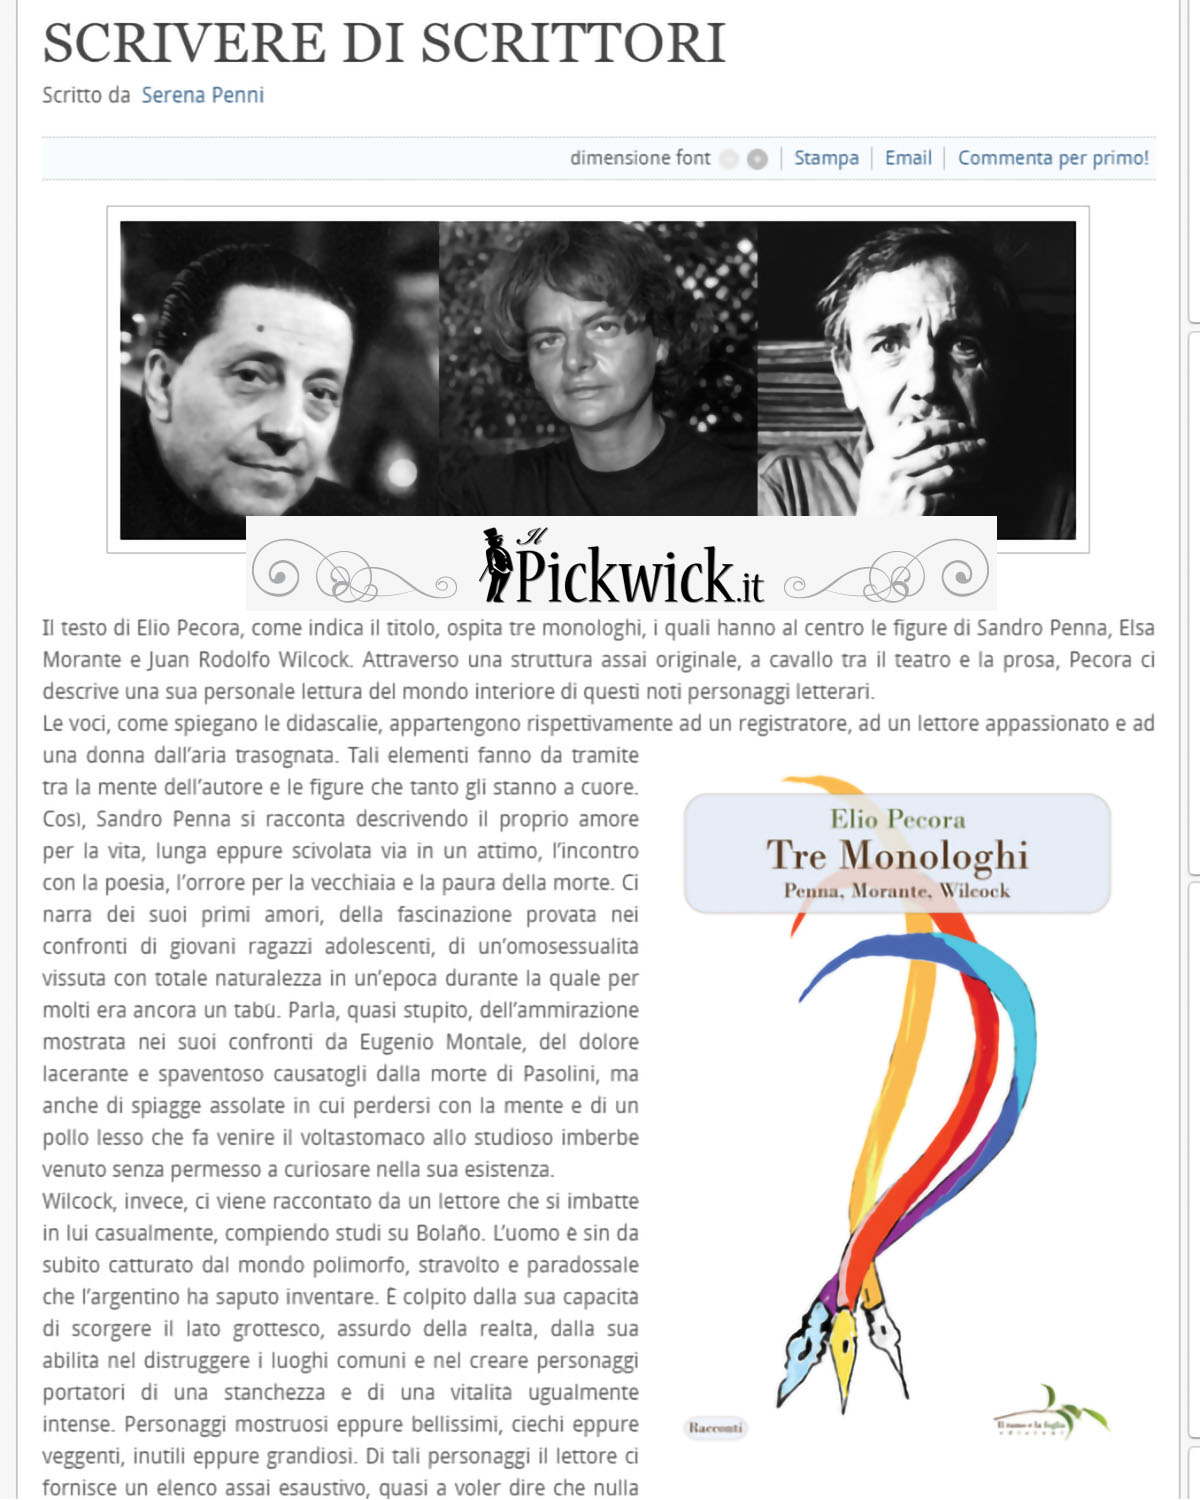 Pagina di Pickwick.it